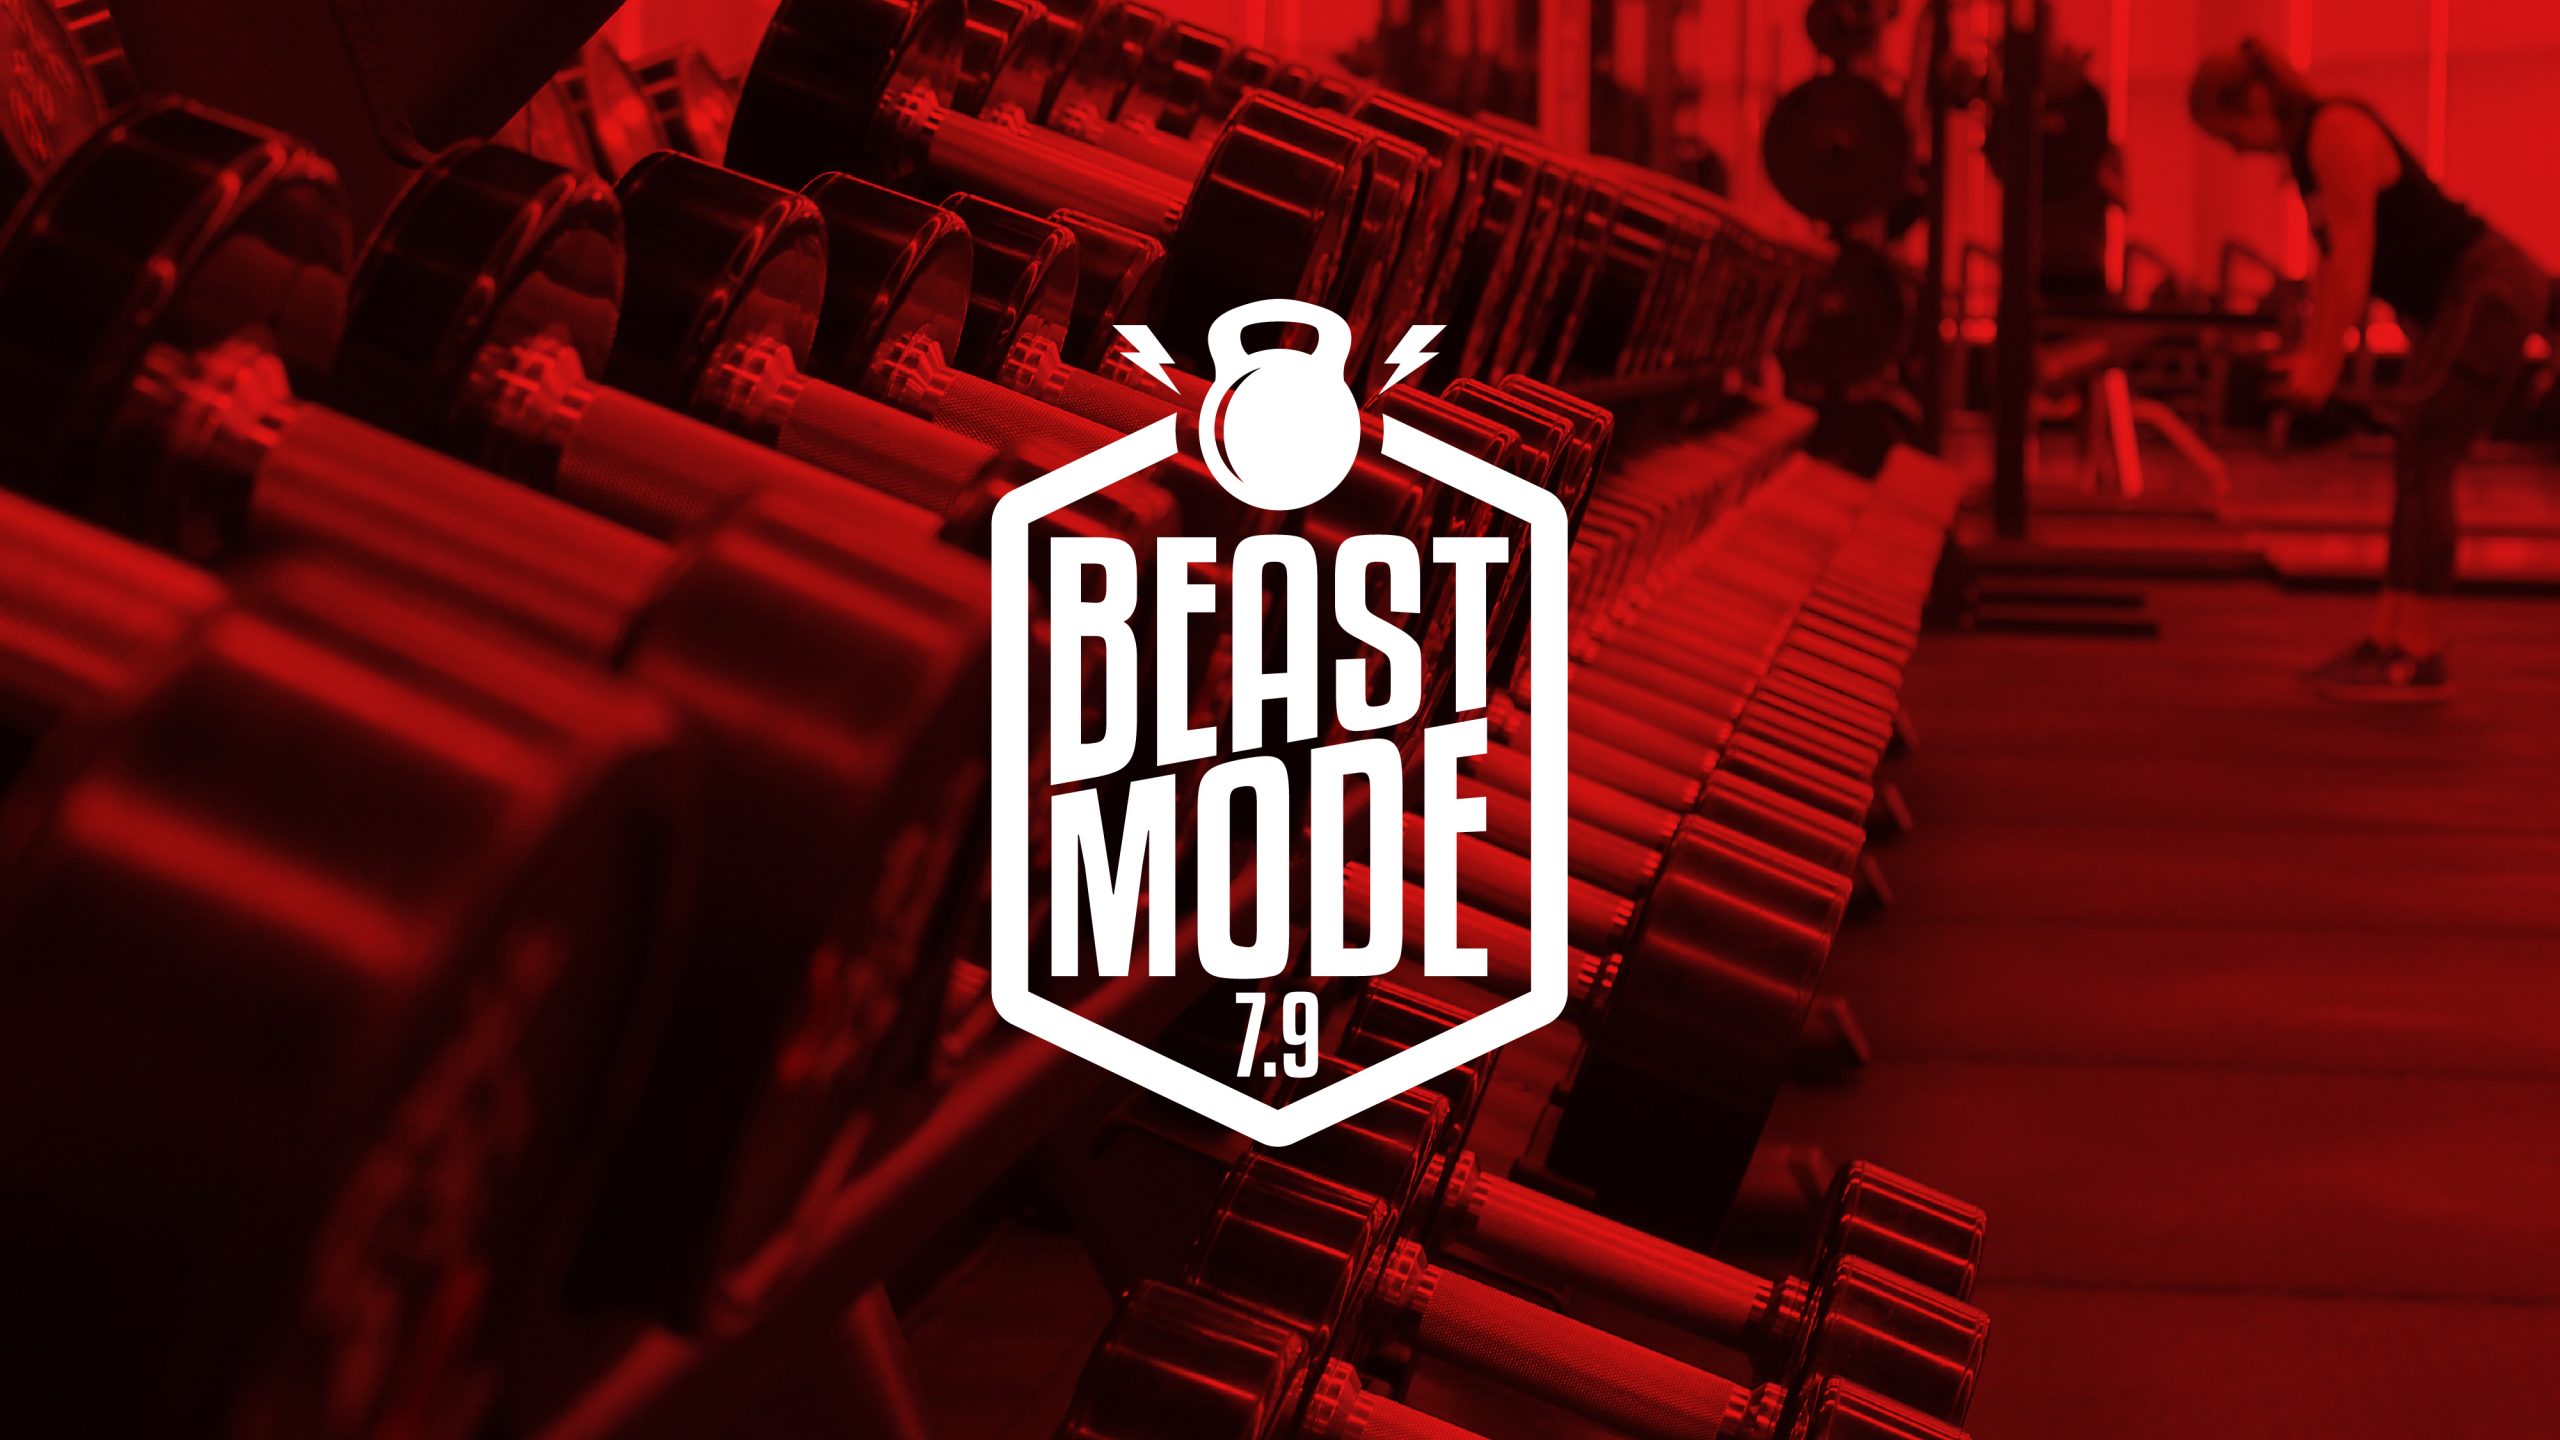 Beat Mode 7.9